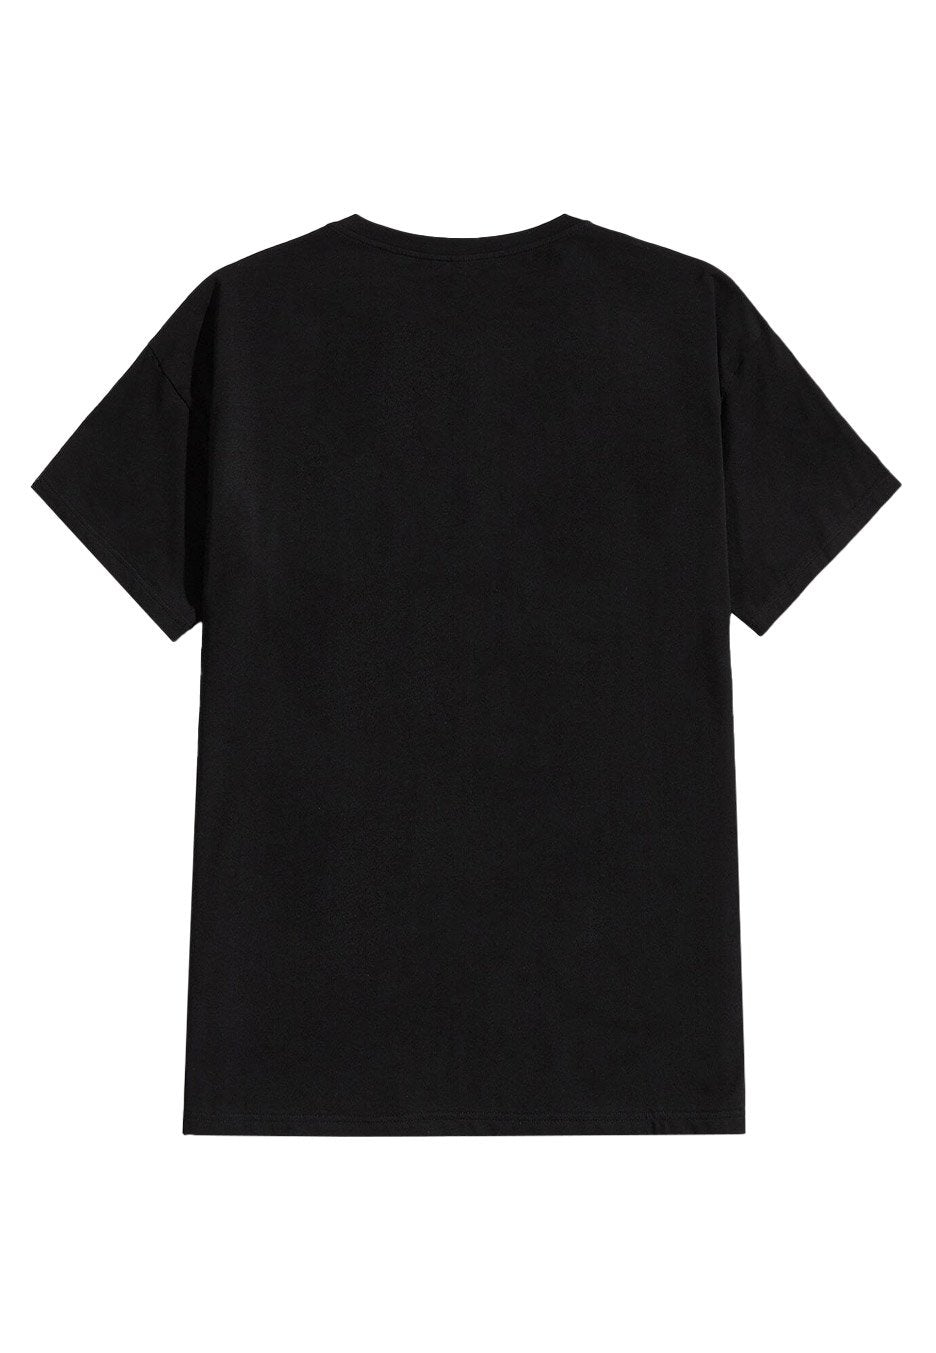 Whitechapel - Church Burner - T-Shirt